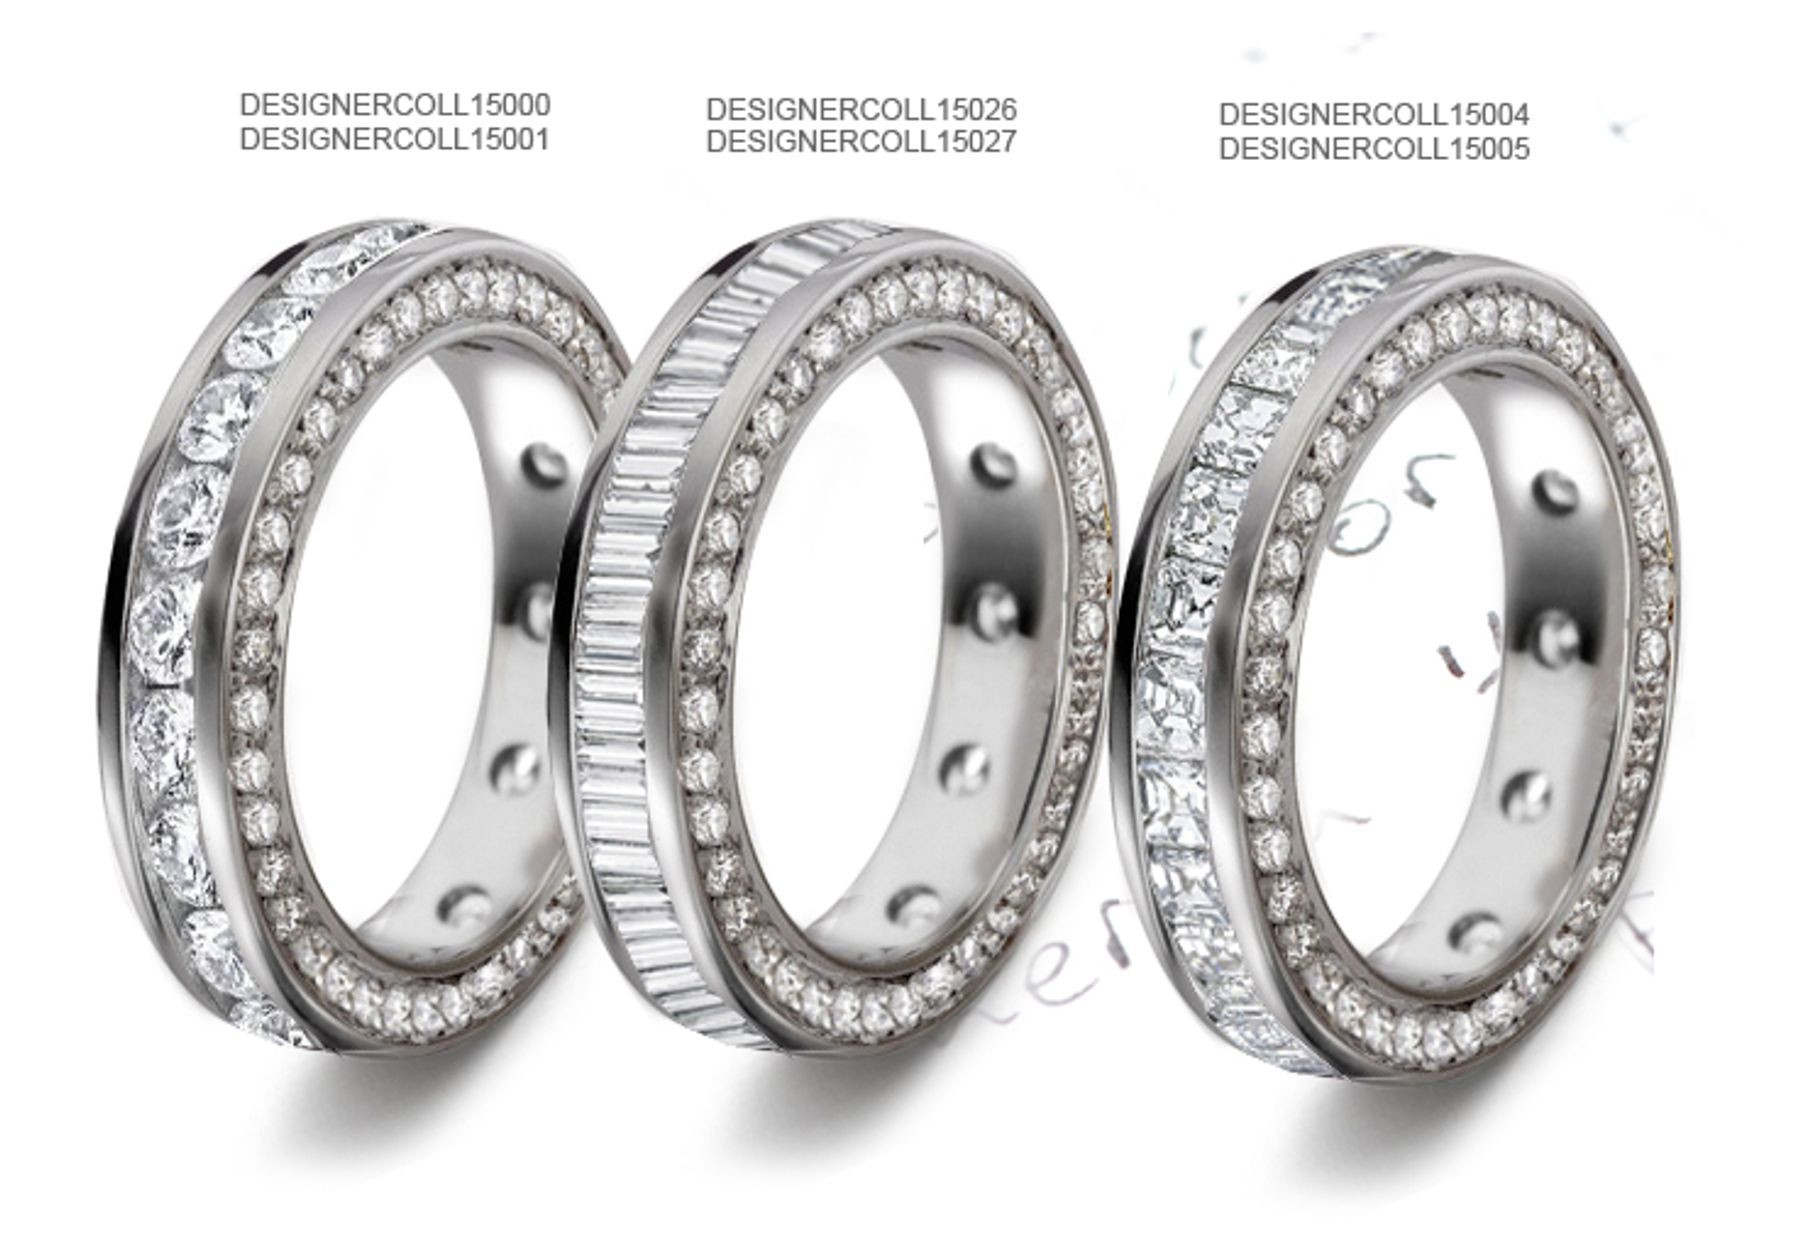 Sparkling & Glittering: A Princess & Baguette Cut Channel Set Diamond Ring Diamond Set Sides